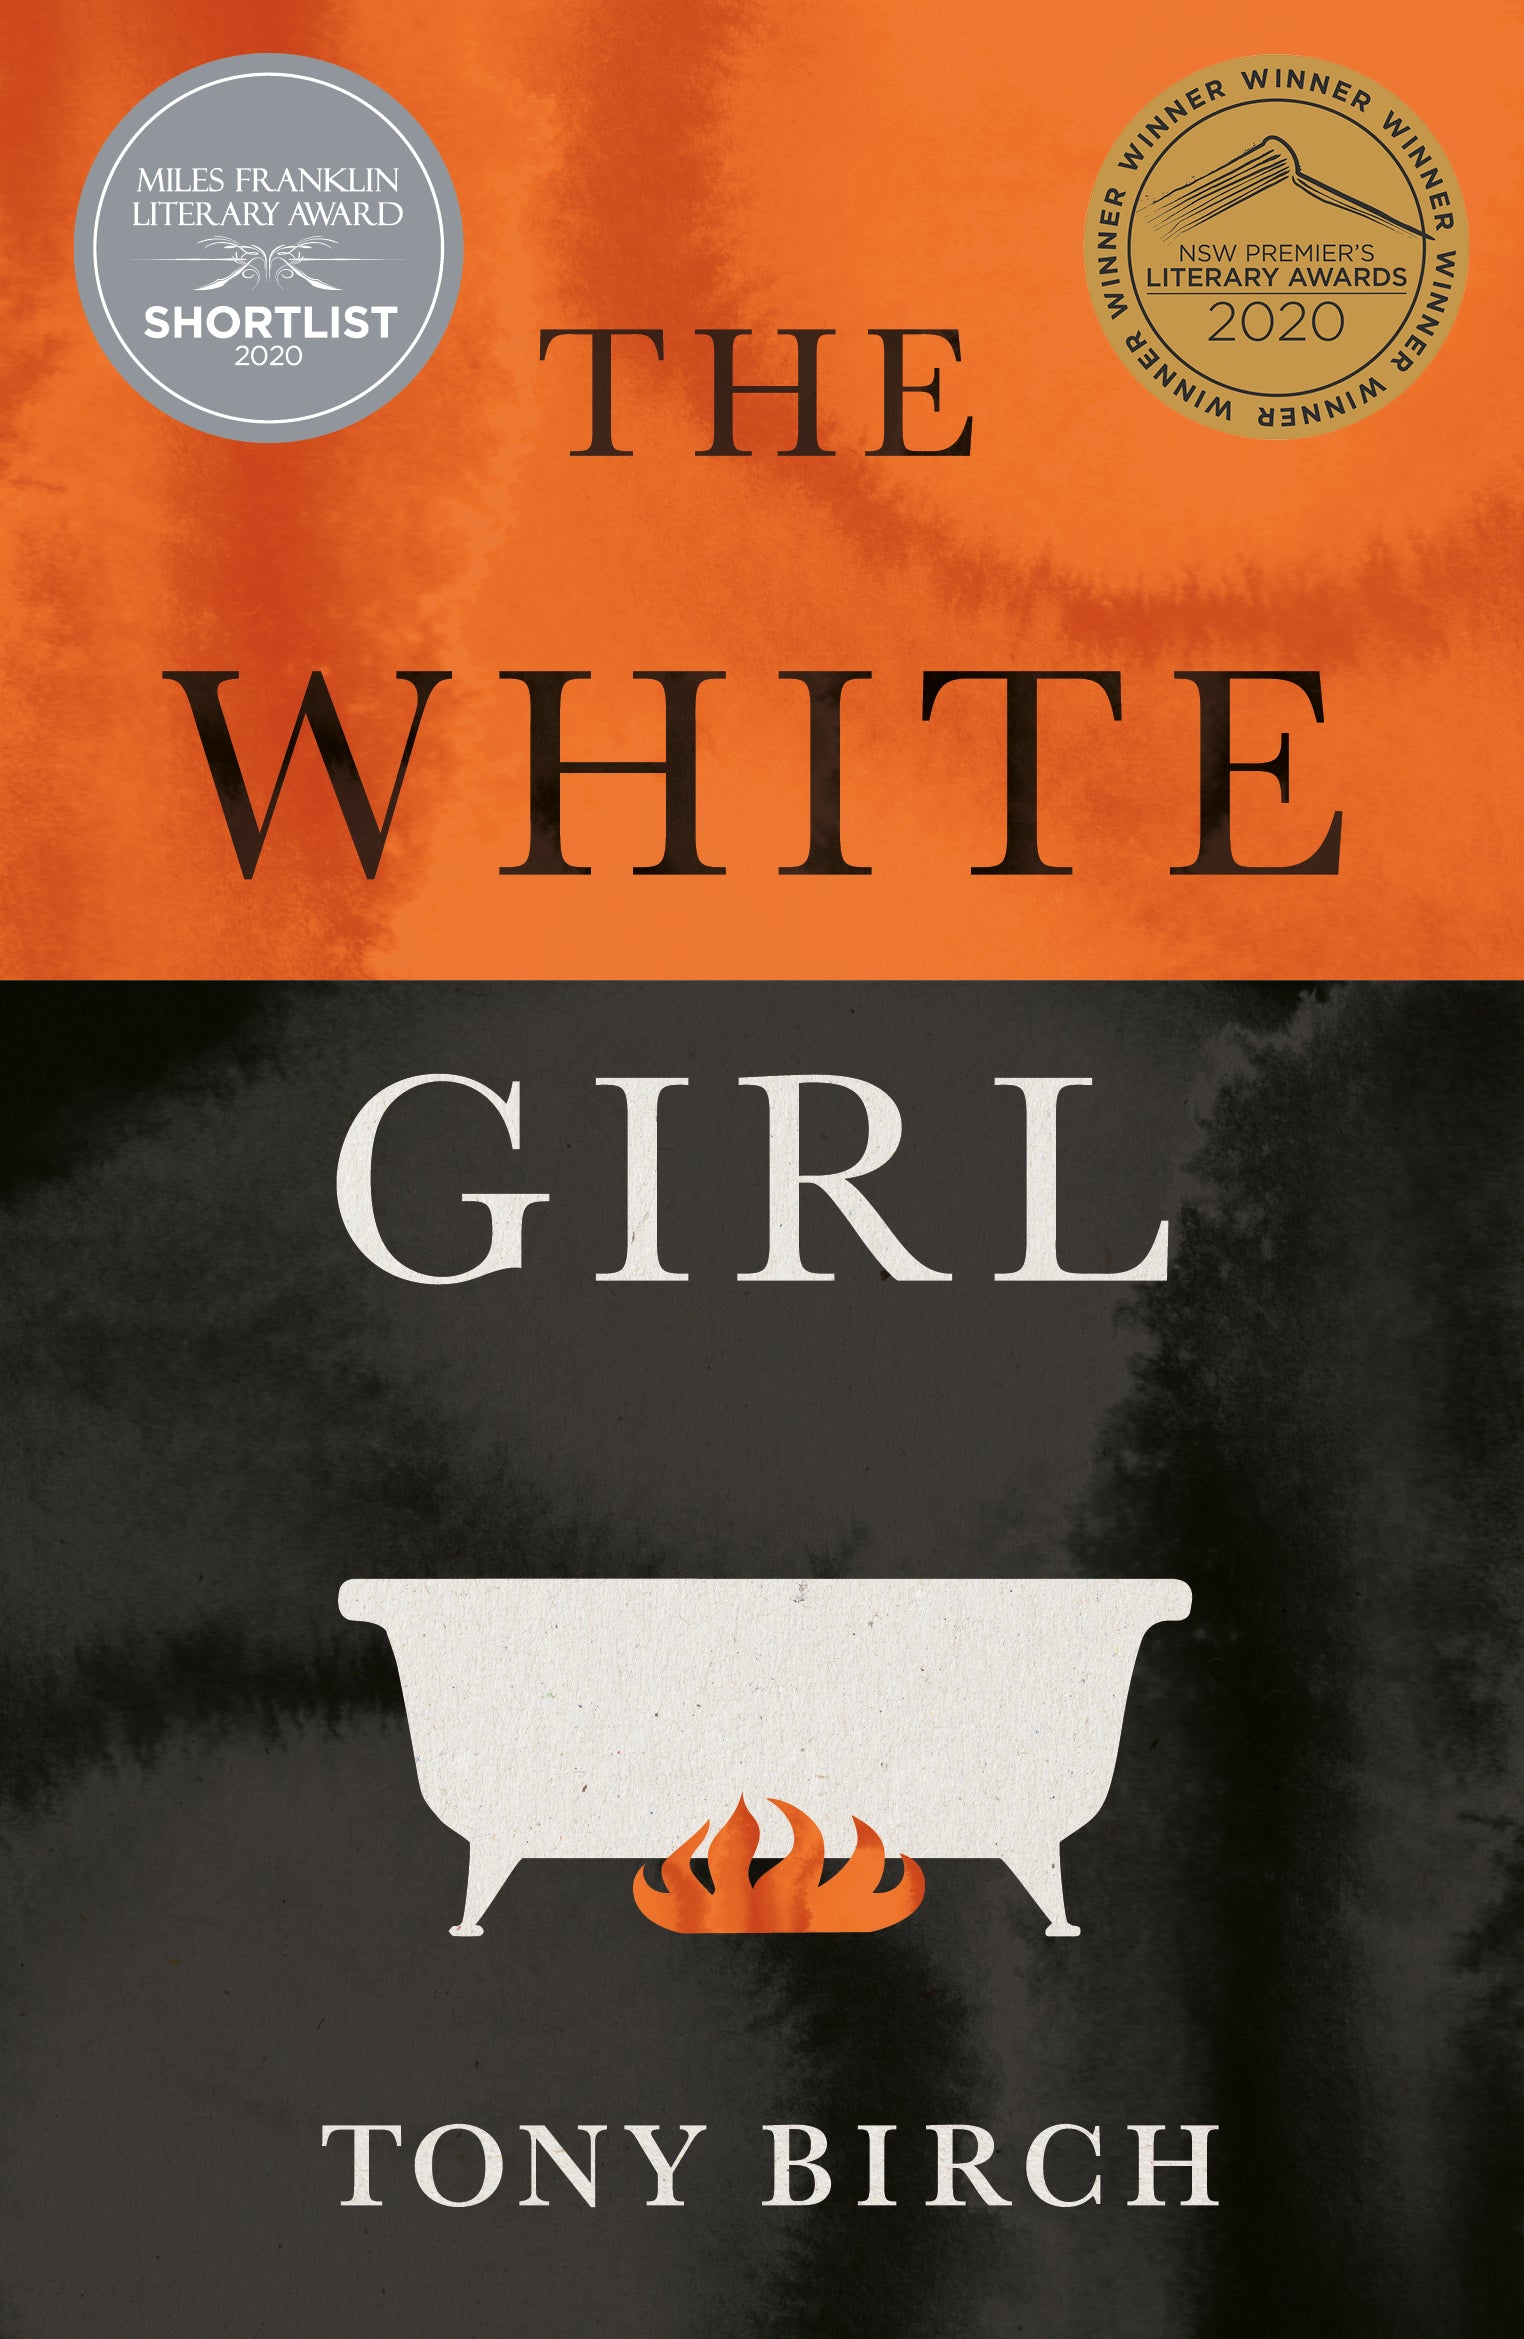 The white girl by Tony Birch